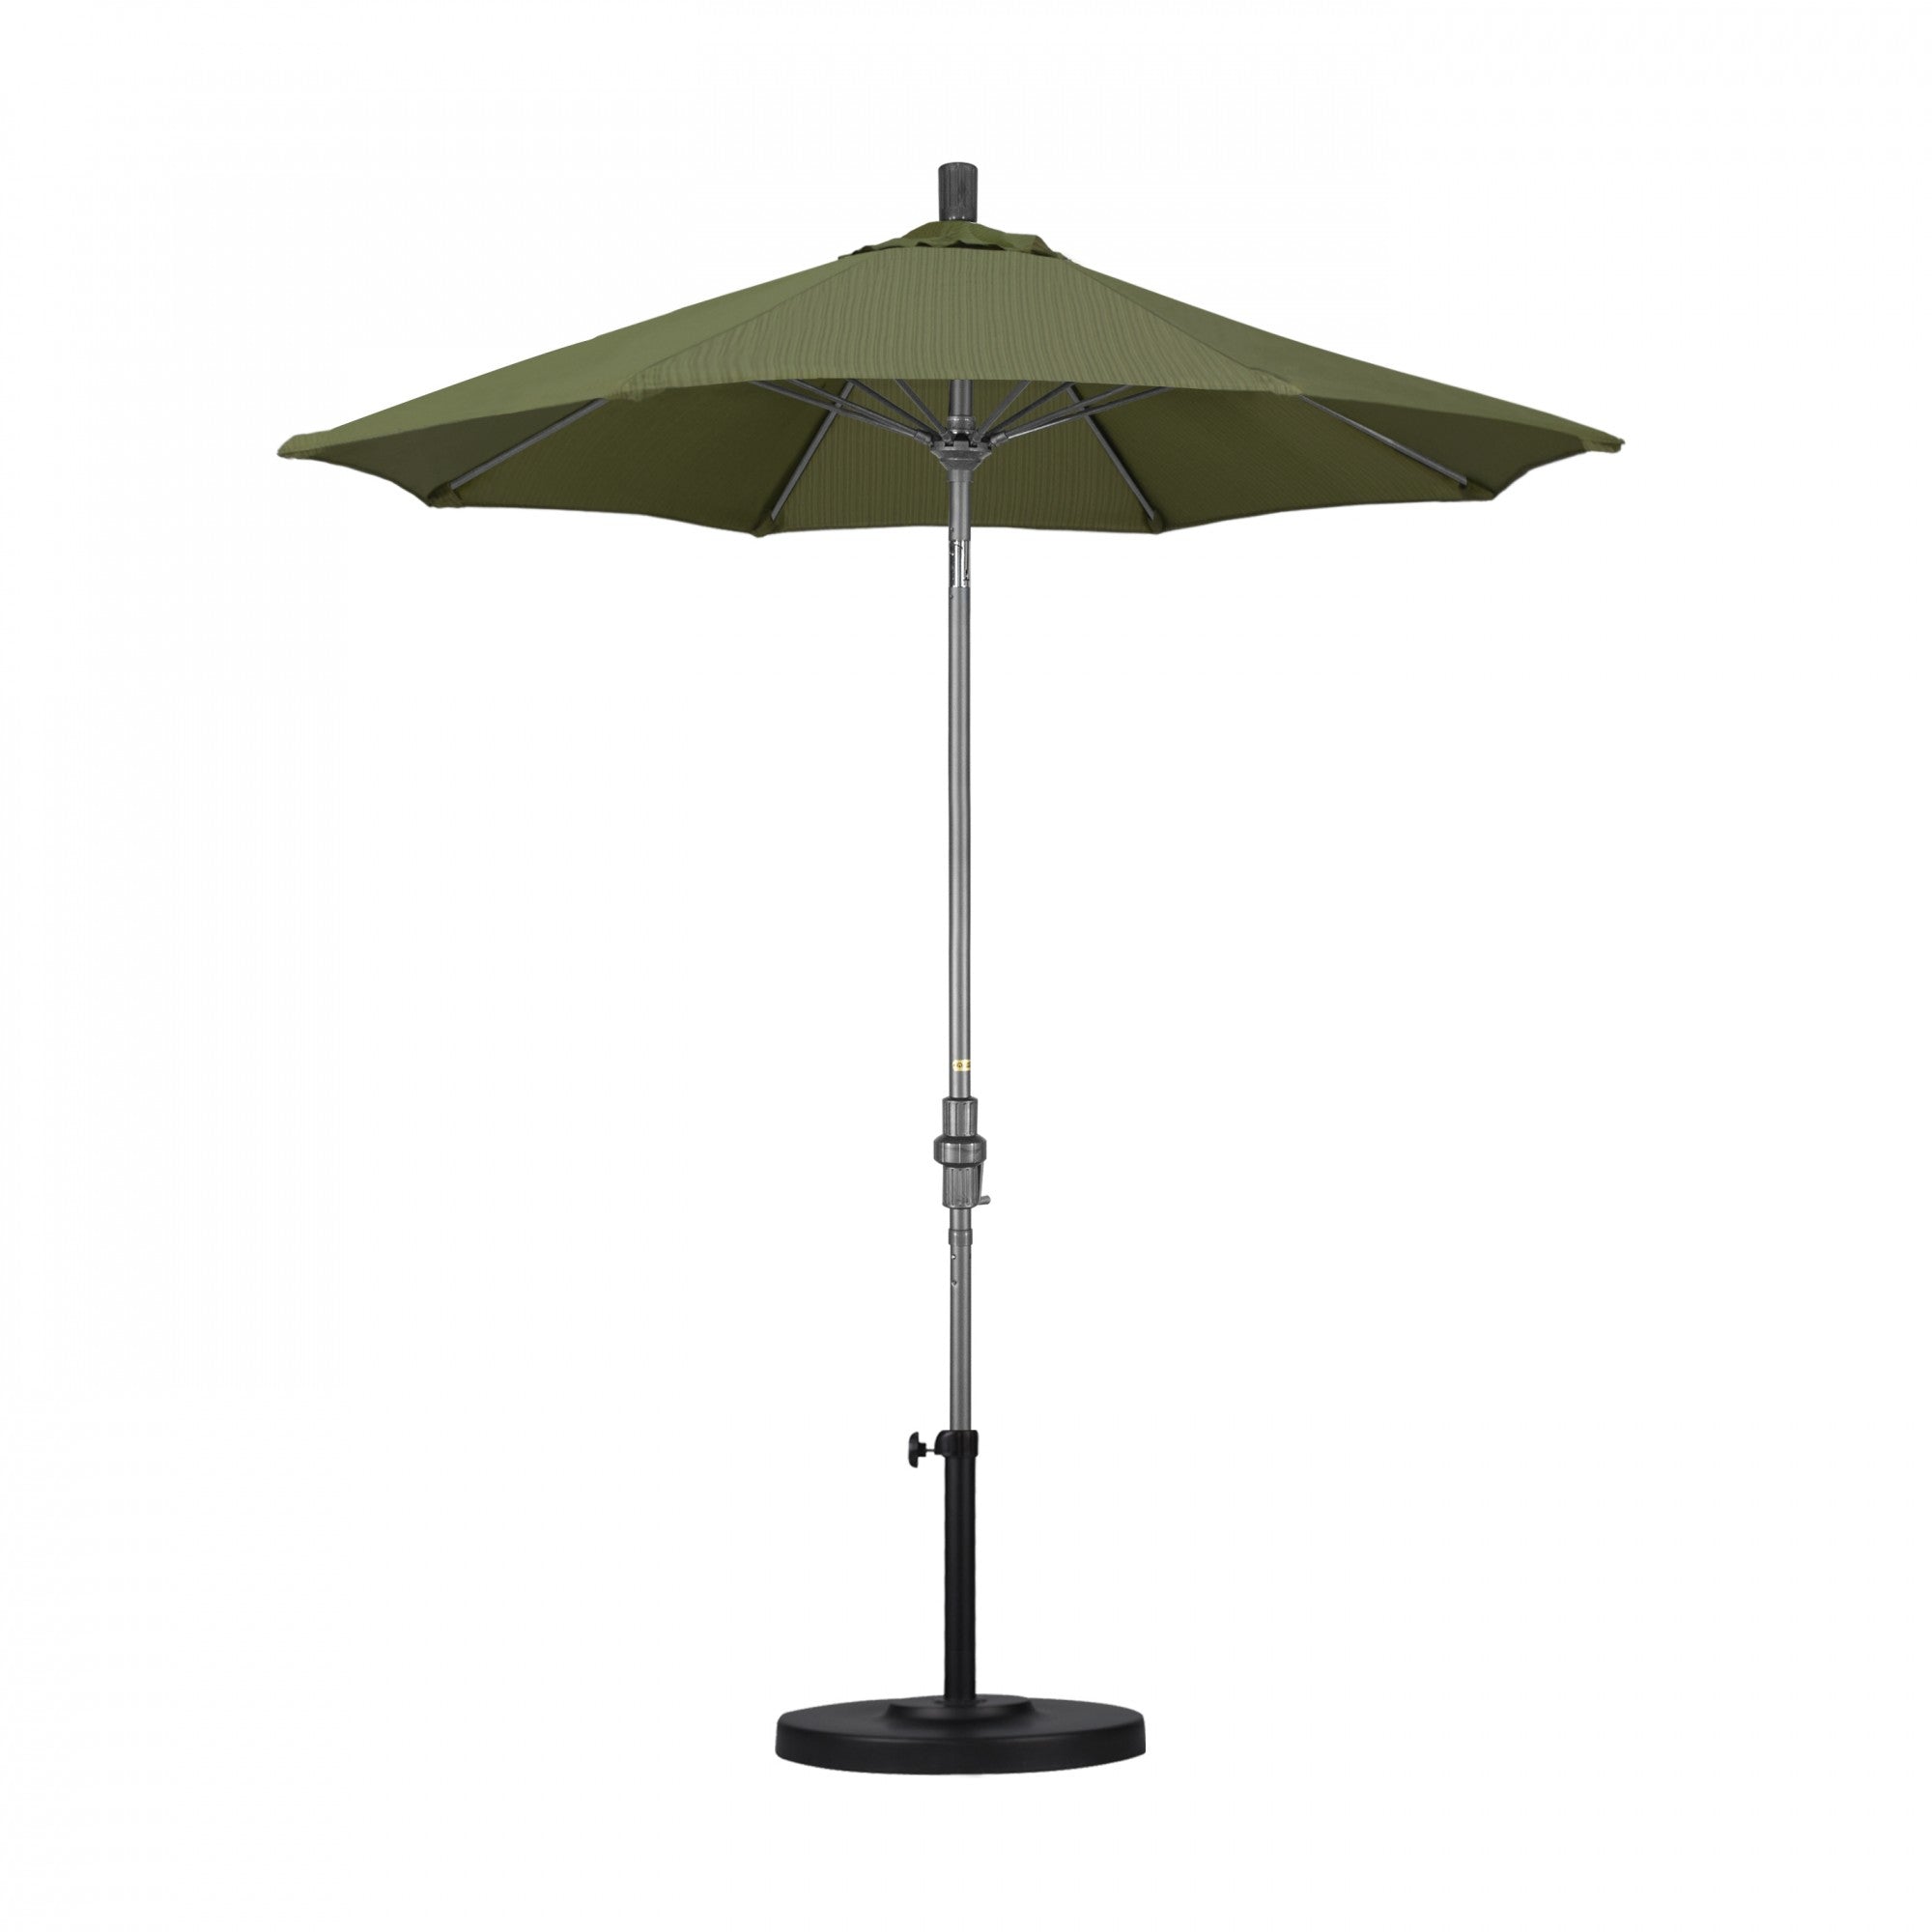 California Umbrella - 7.5' - Patio Umbrella Umbrella - Aluminum Pole - Terrace Fern - Olefin - GSCUF758010-FD11